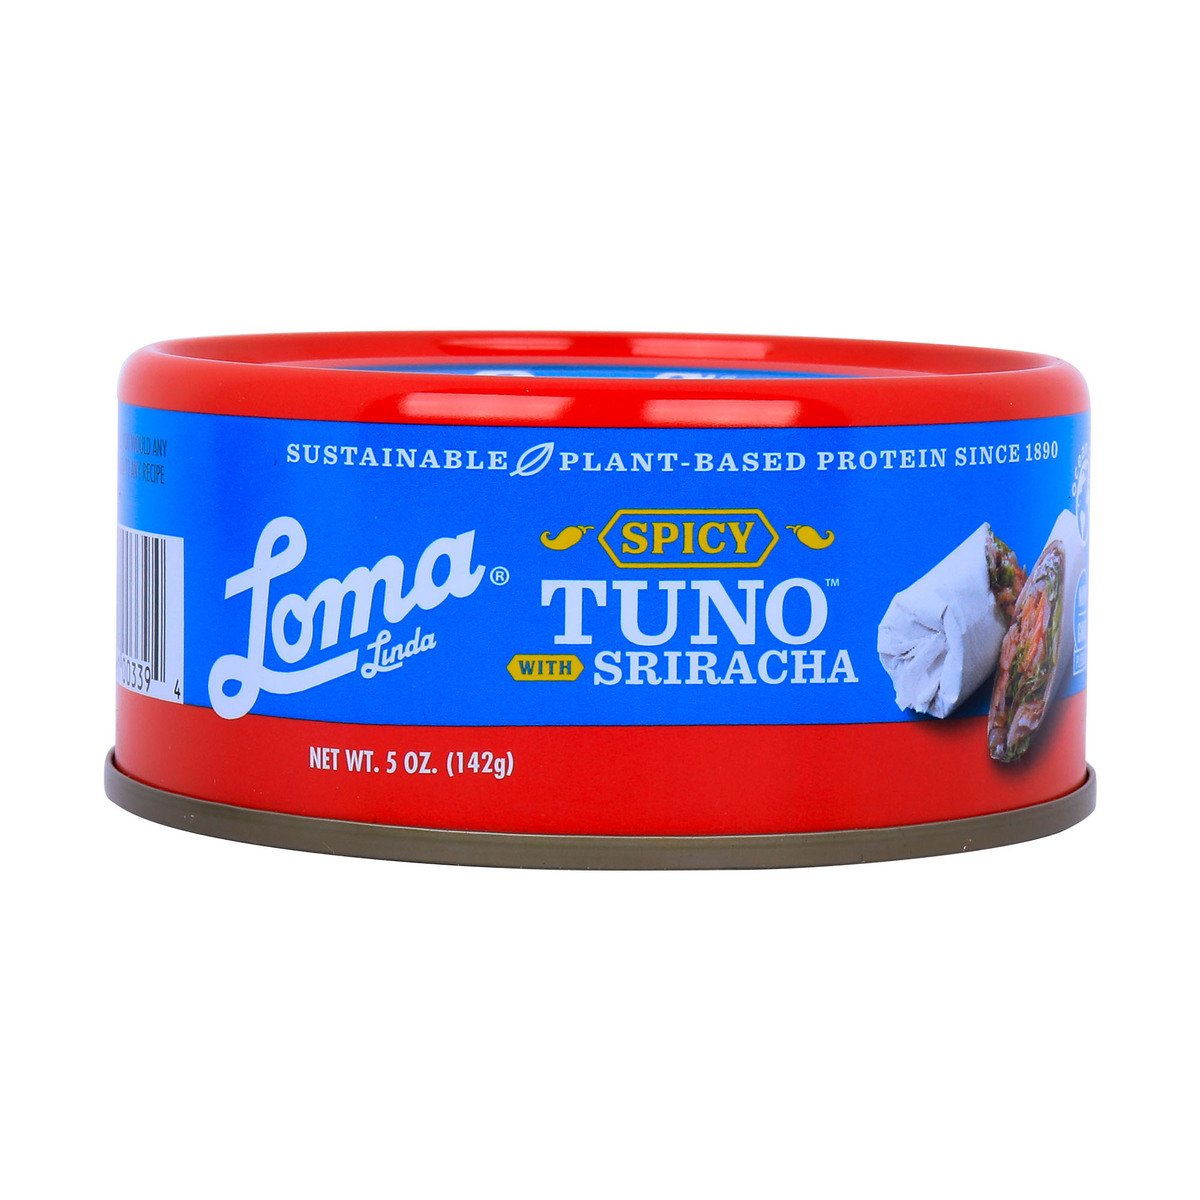 Loma Linda Plant Based Tuno With Sriracha 142 g